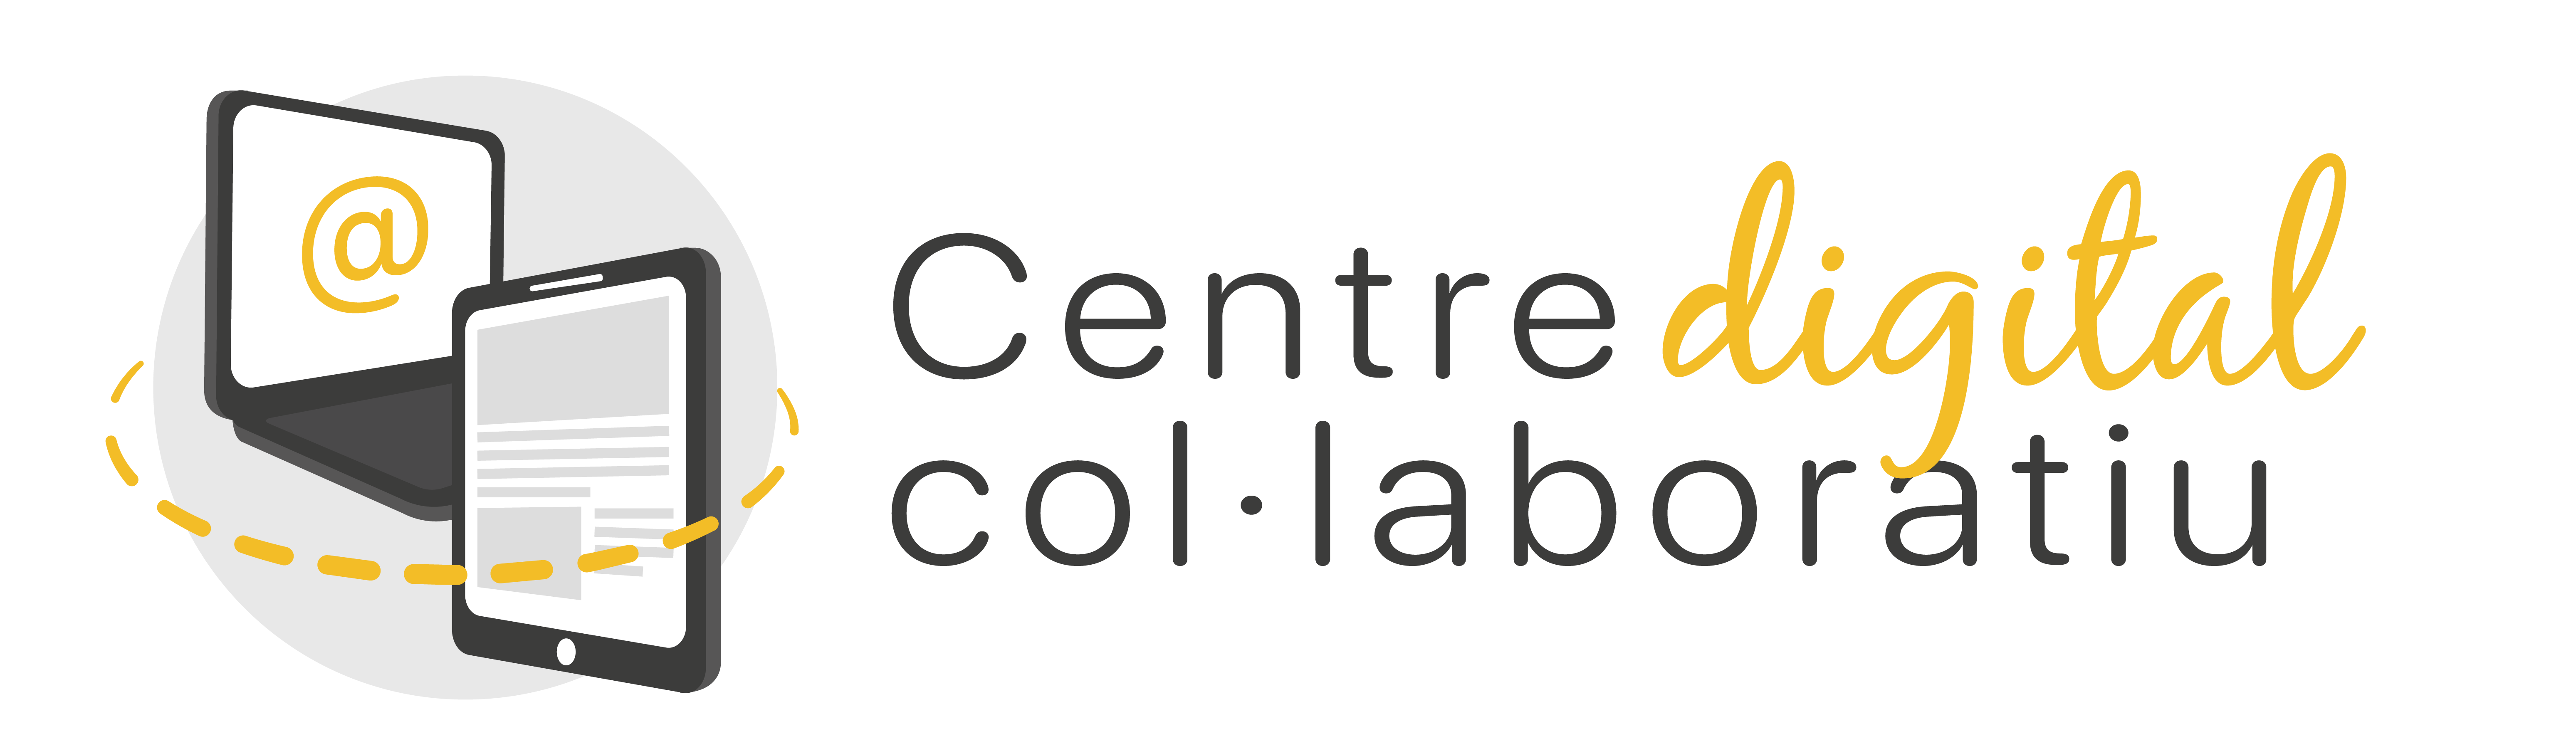 Logo-centro colaborativo-01-01-01-01